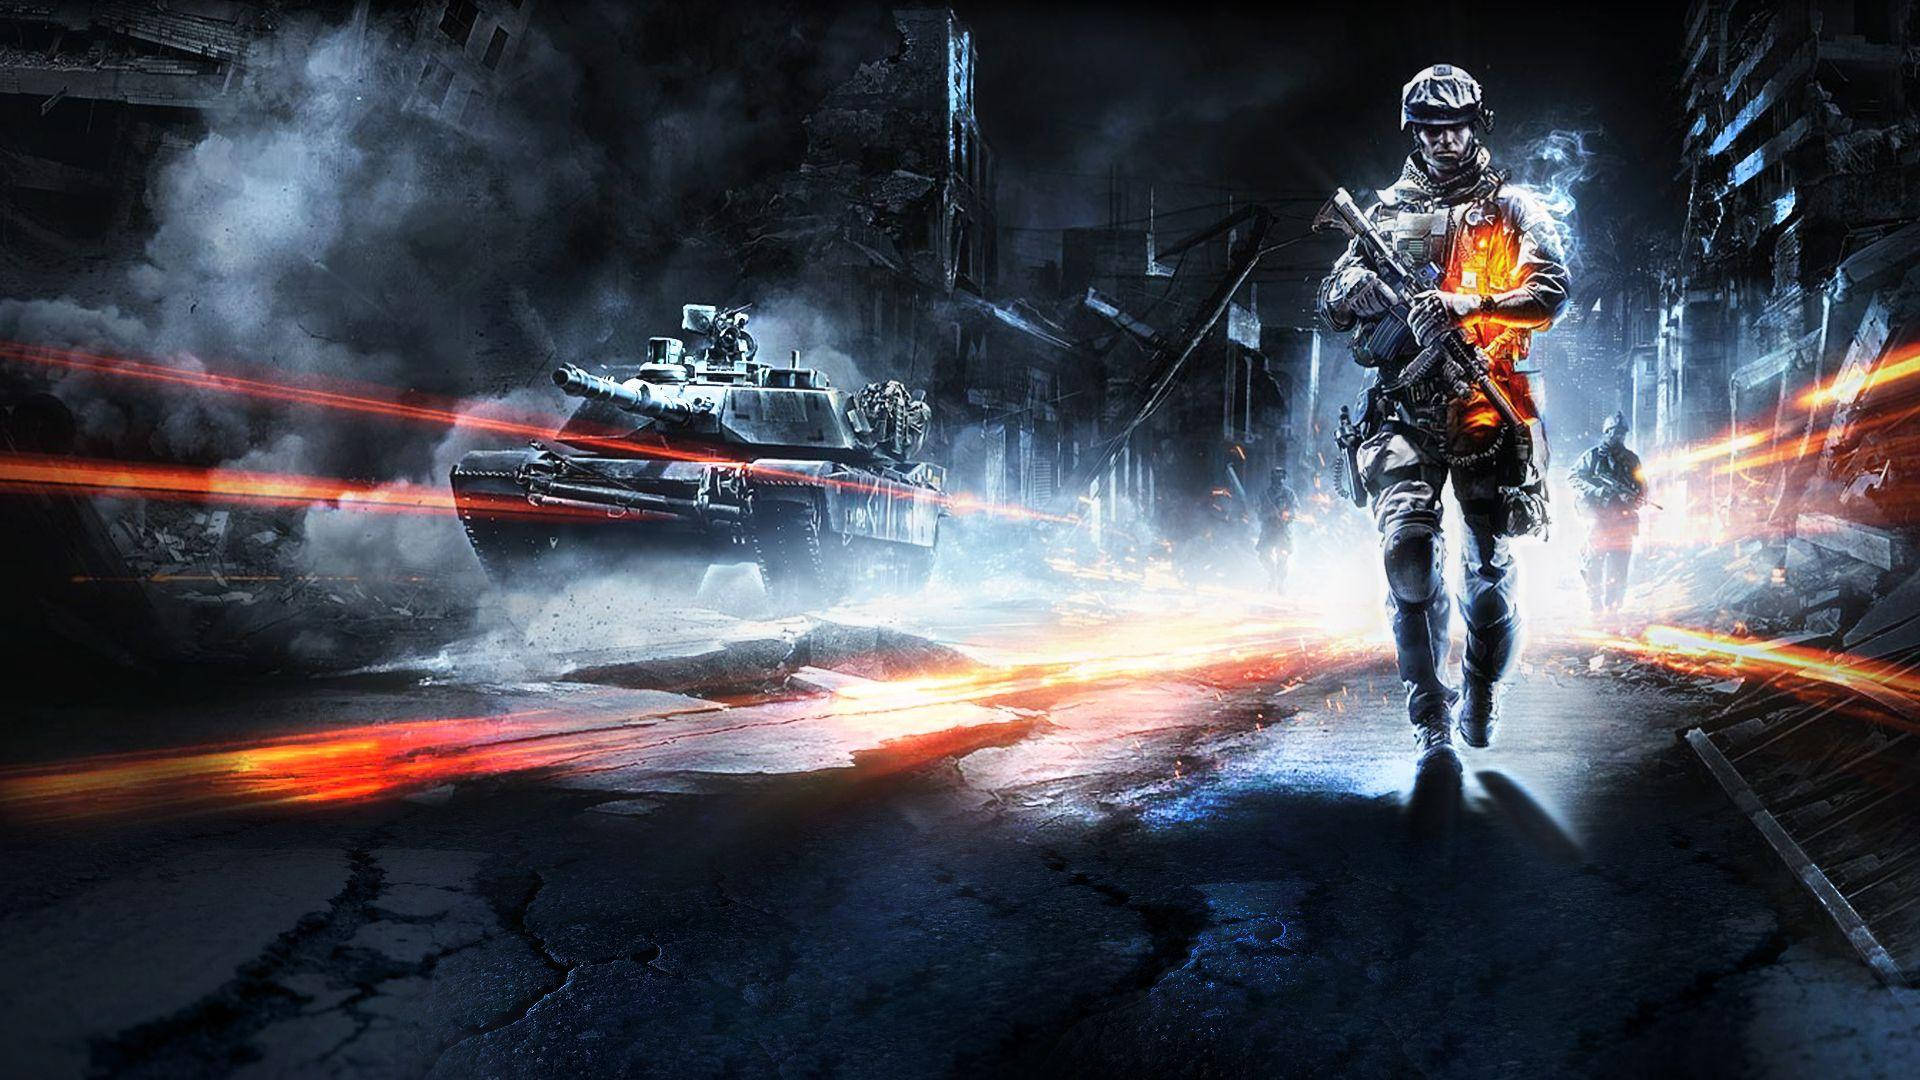 Battlefield 1 Hd Image Of Nighttime Warzone Background